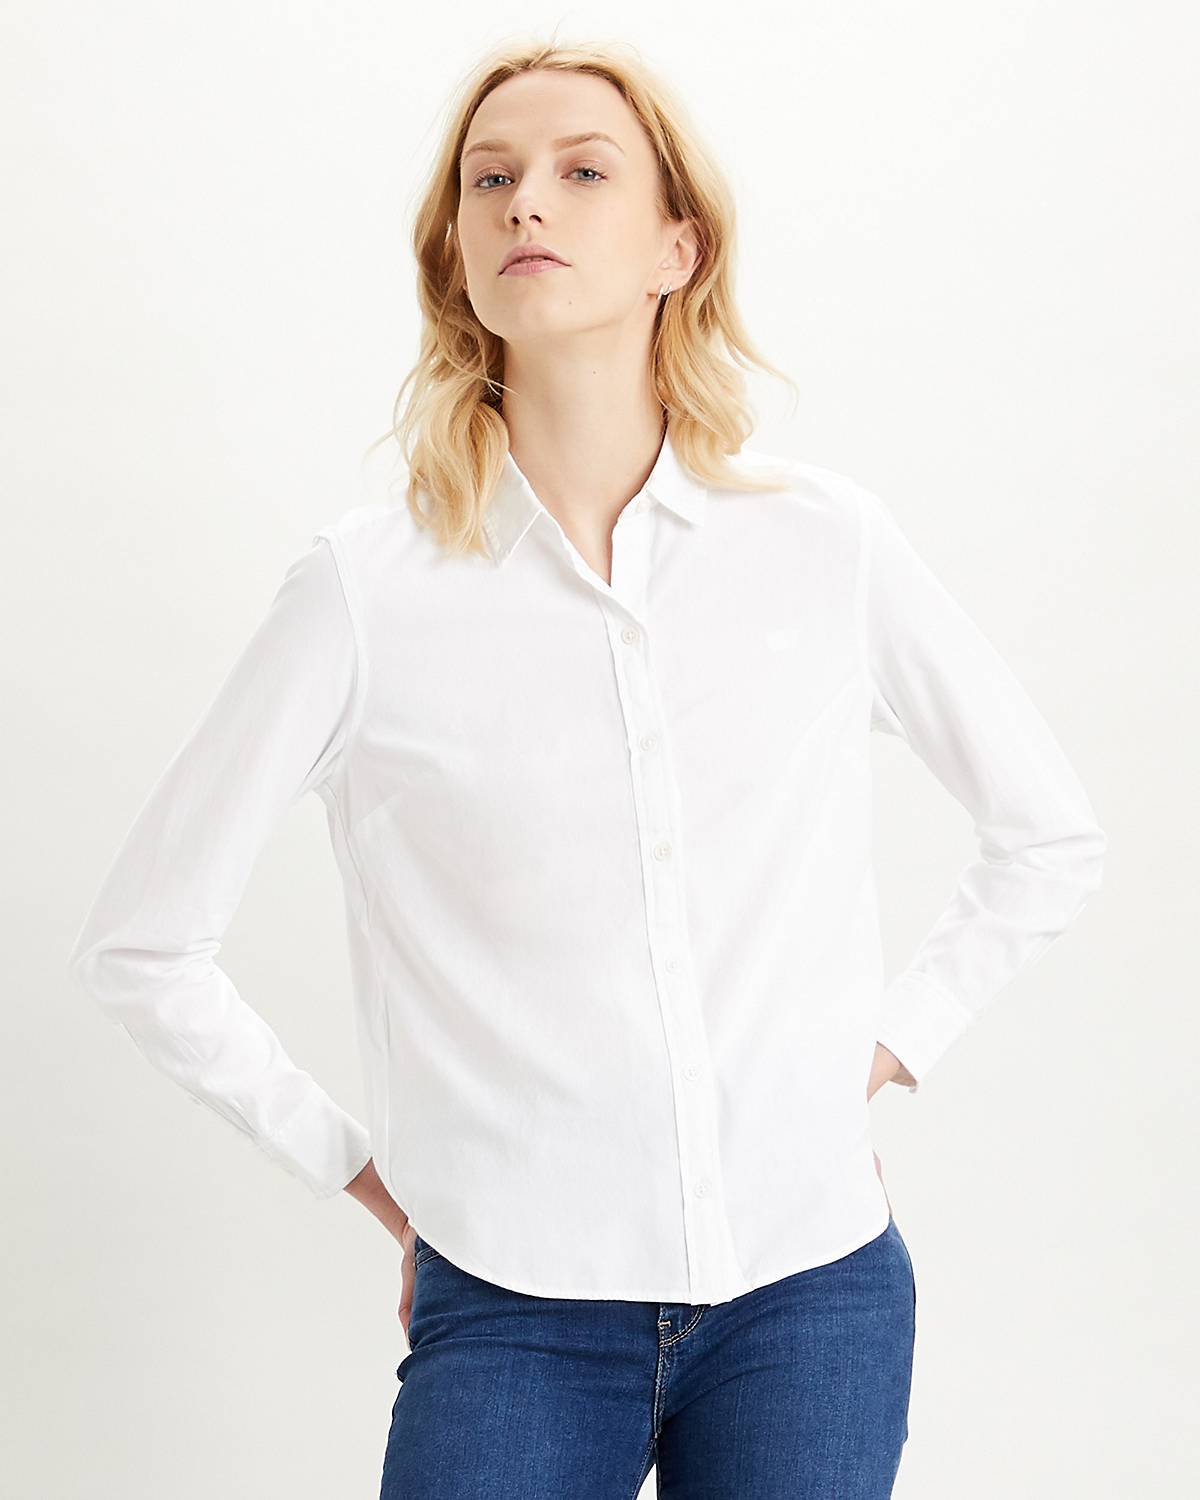 1 X Women Blouse Bodysuit Shirt V-neck Button Down Long Sleeve Top White  Black Classic